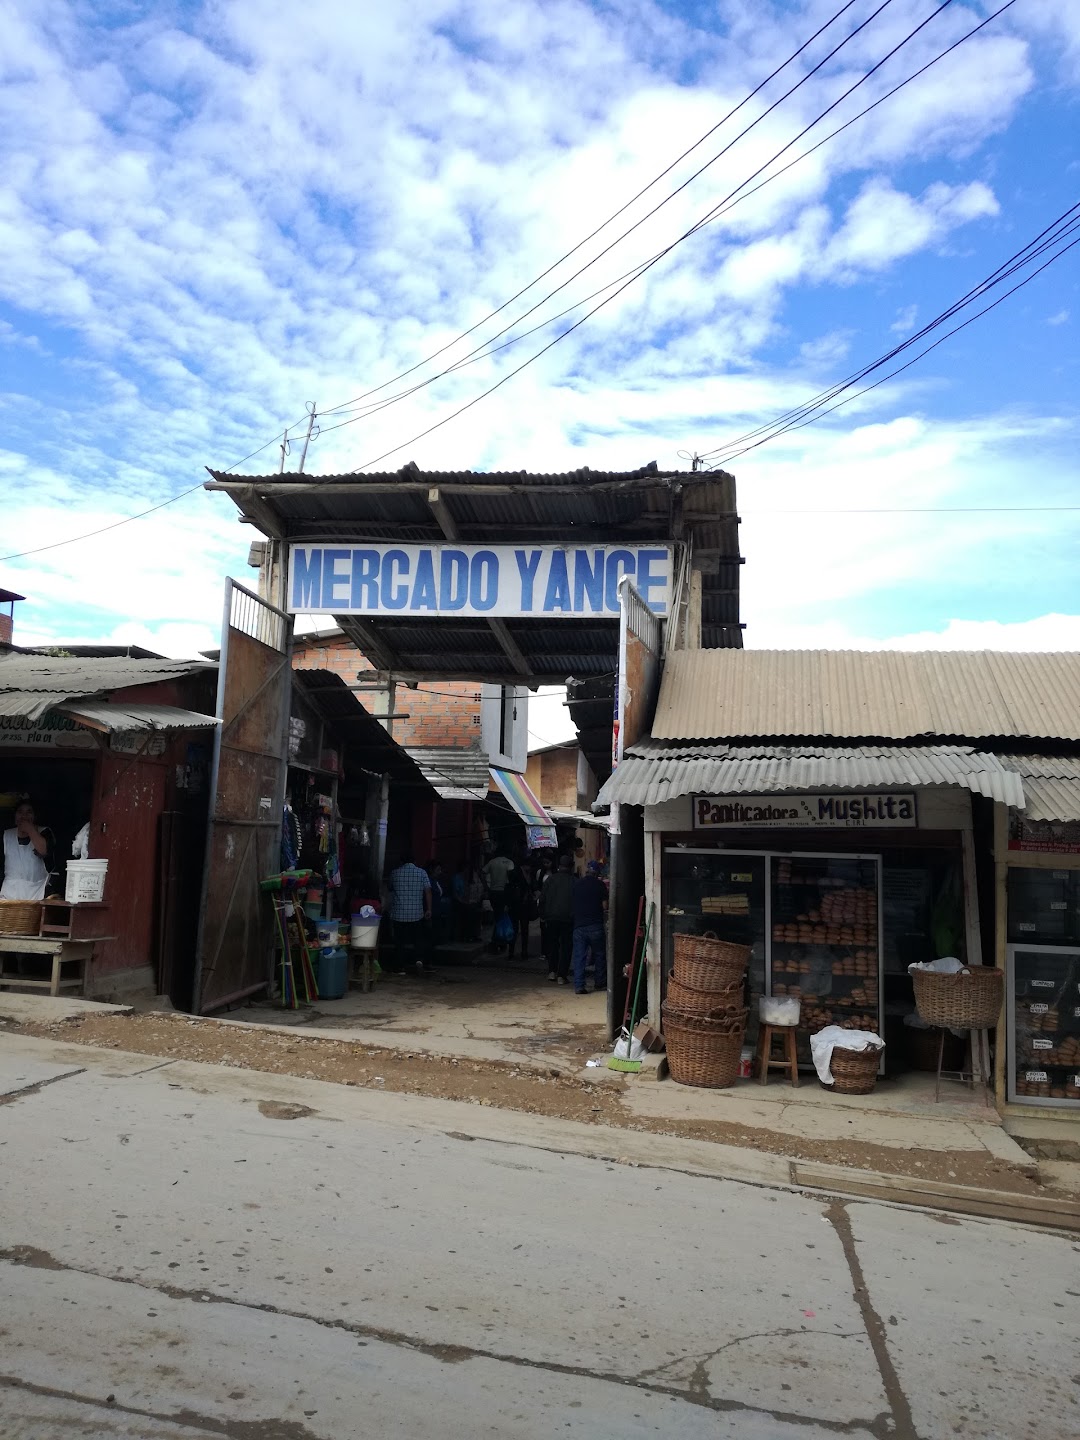 Mercado de abasto Yance